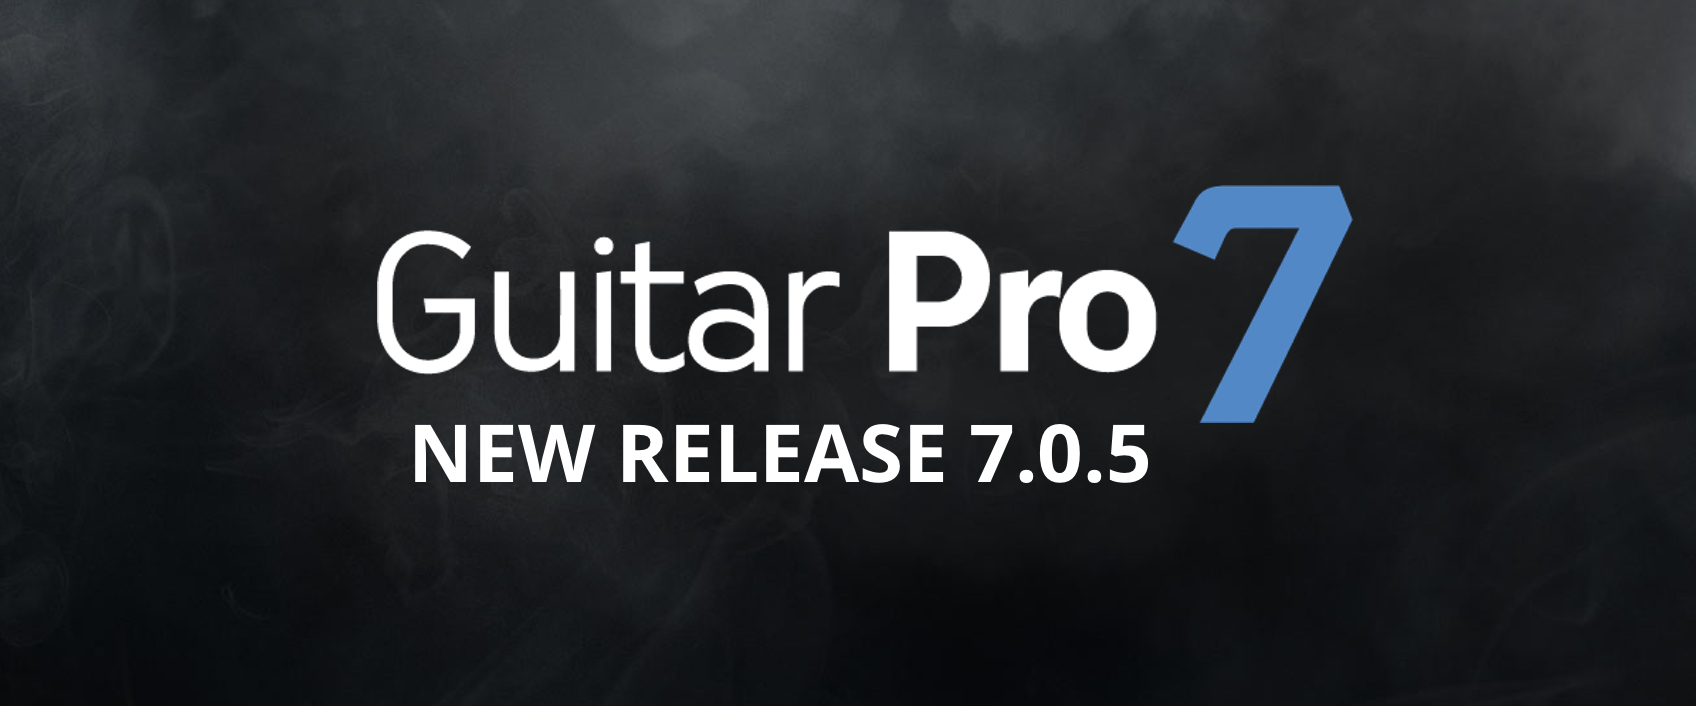 guitar pro 7 download size